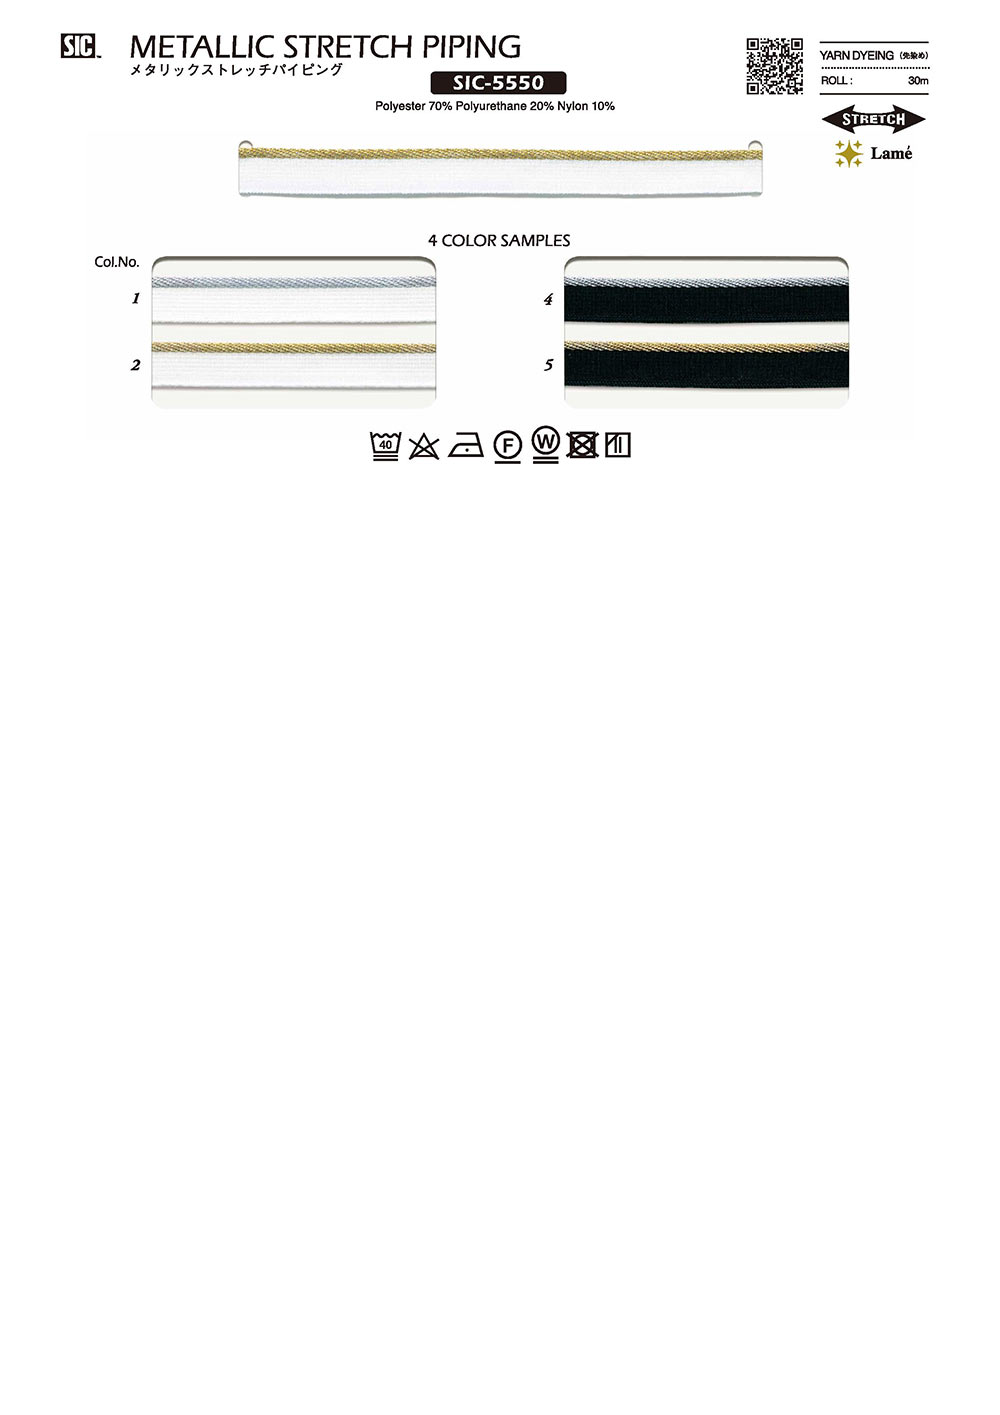 SIC-5550 Metallic Stretch Piping Tape[Ribbon Tape Cord] SHINDO(SIC)